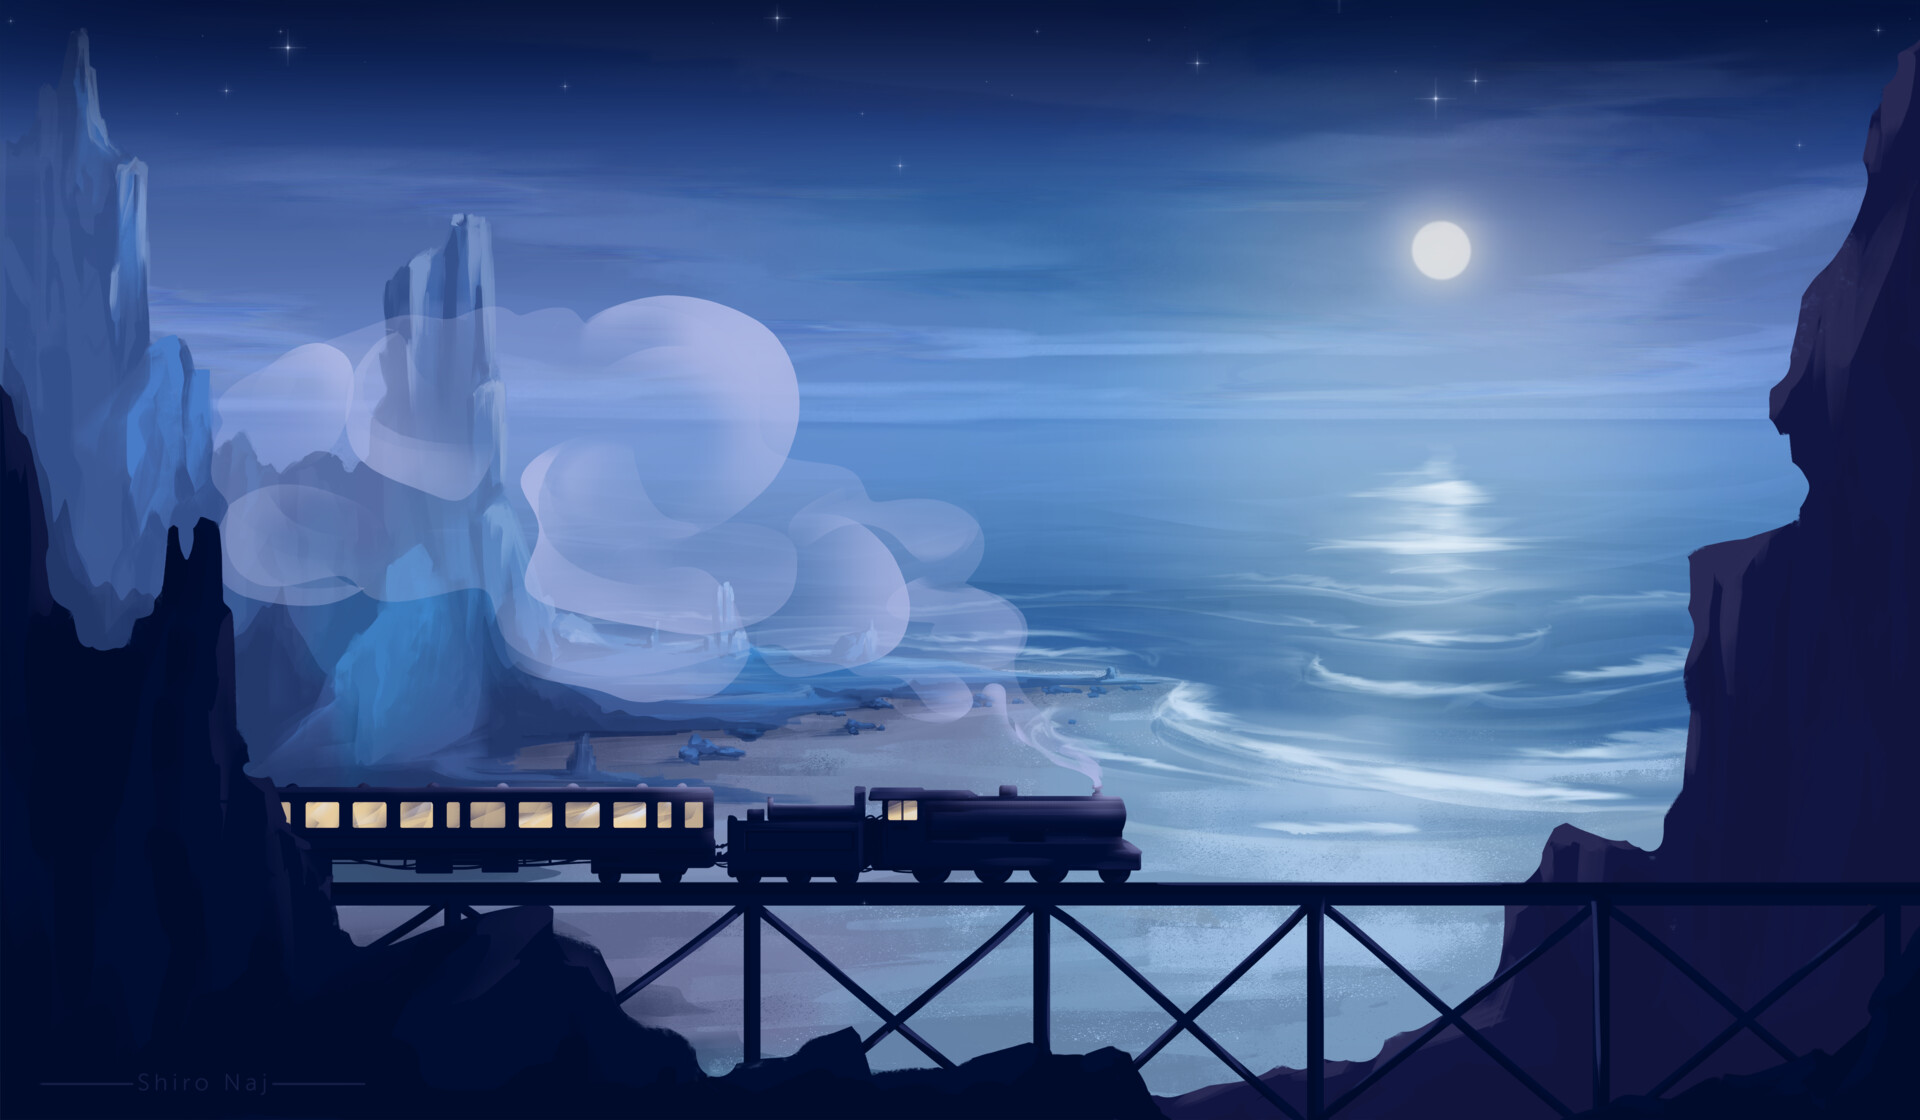 Night Train by Shiro Naj